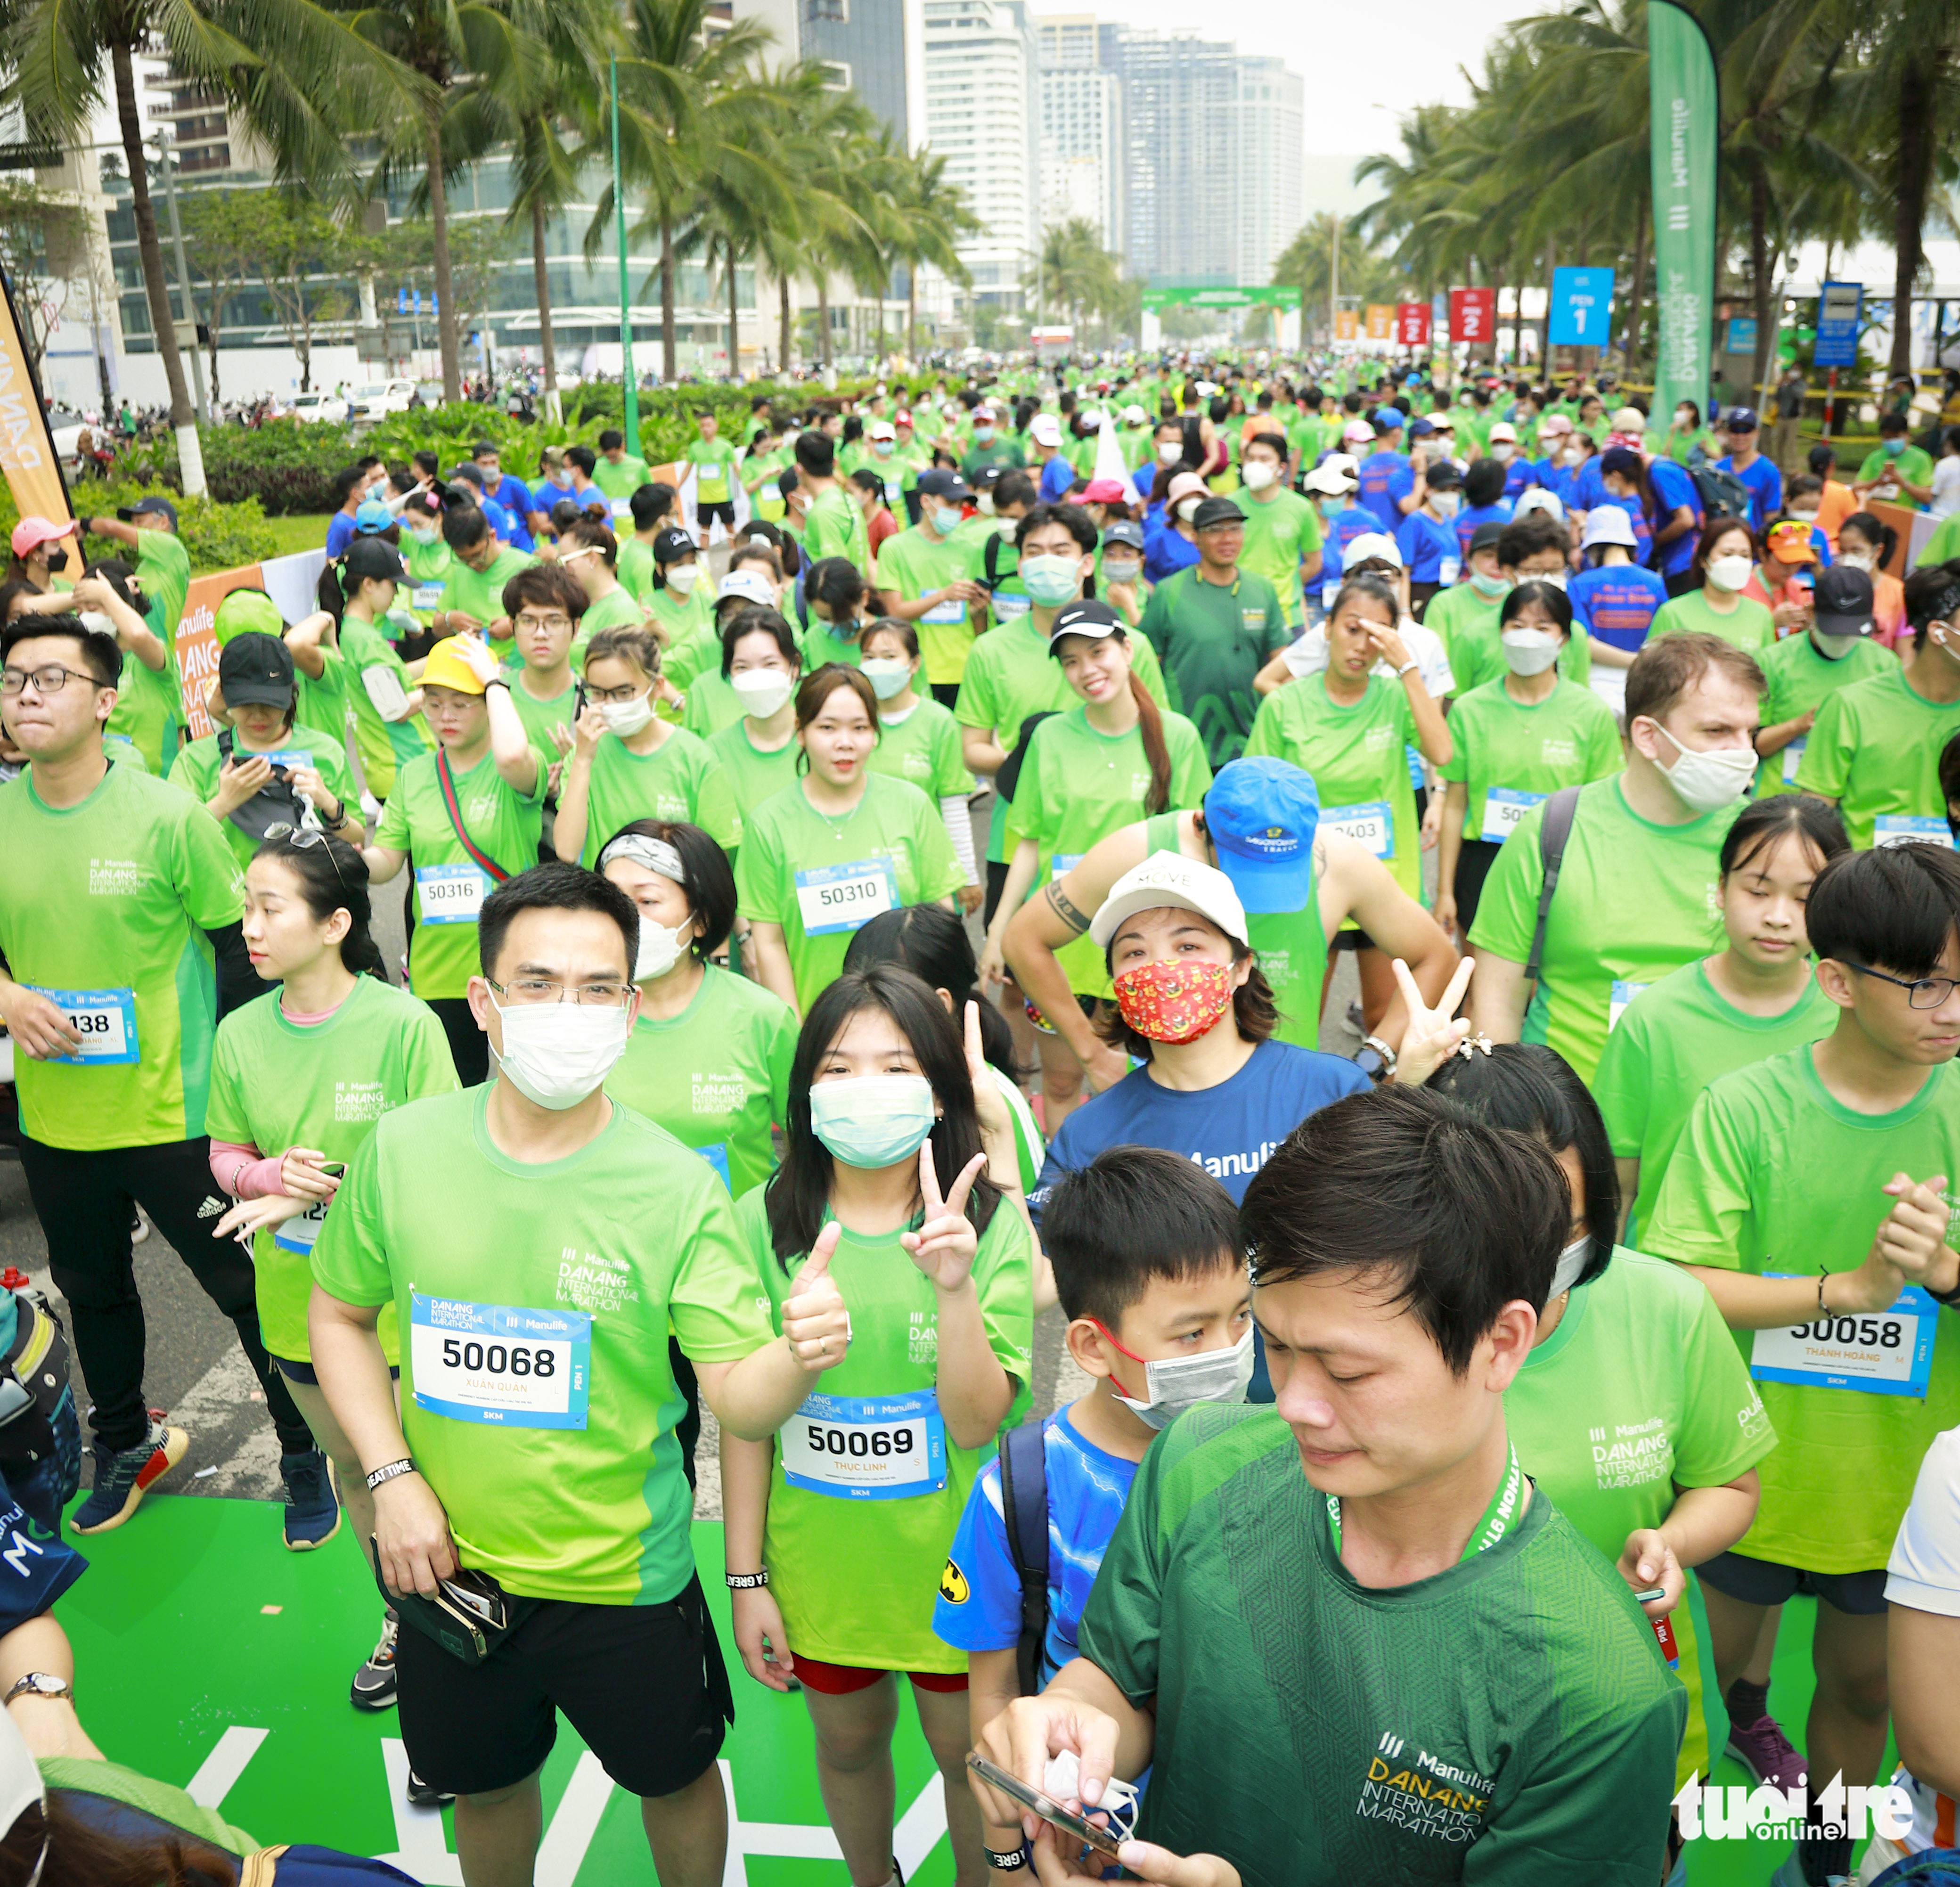 About 5,000 people participate in the Manulife Da Nang International Marathon 2022 in Da Nang City, March 20, 2022. Photo: M.L. / Tuoi Tre